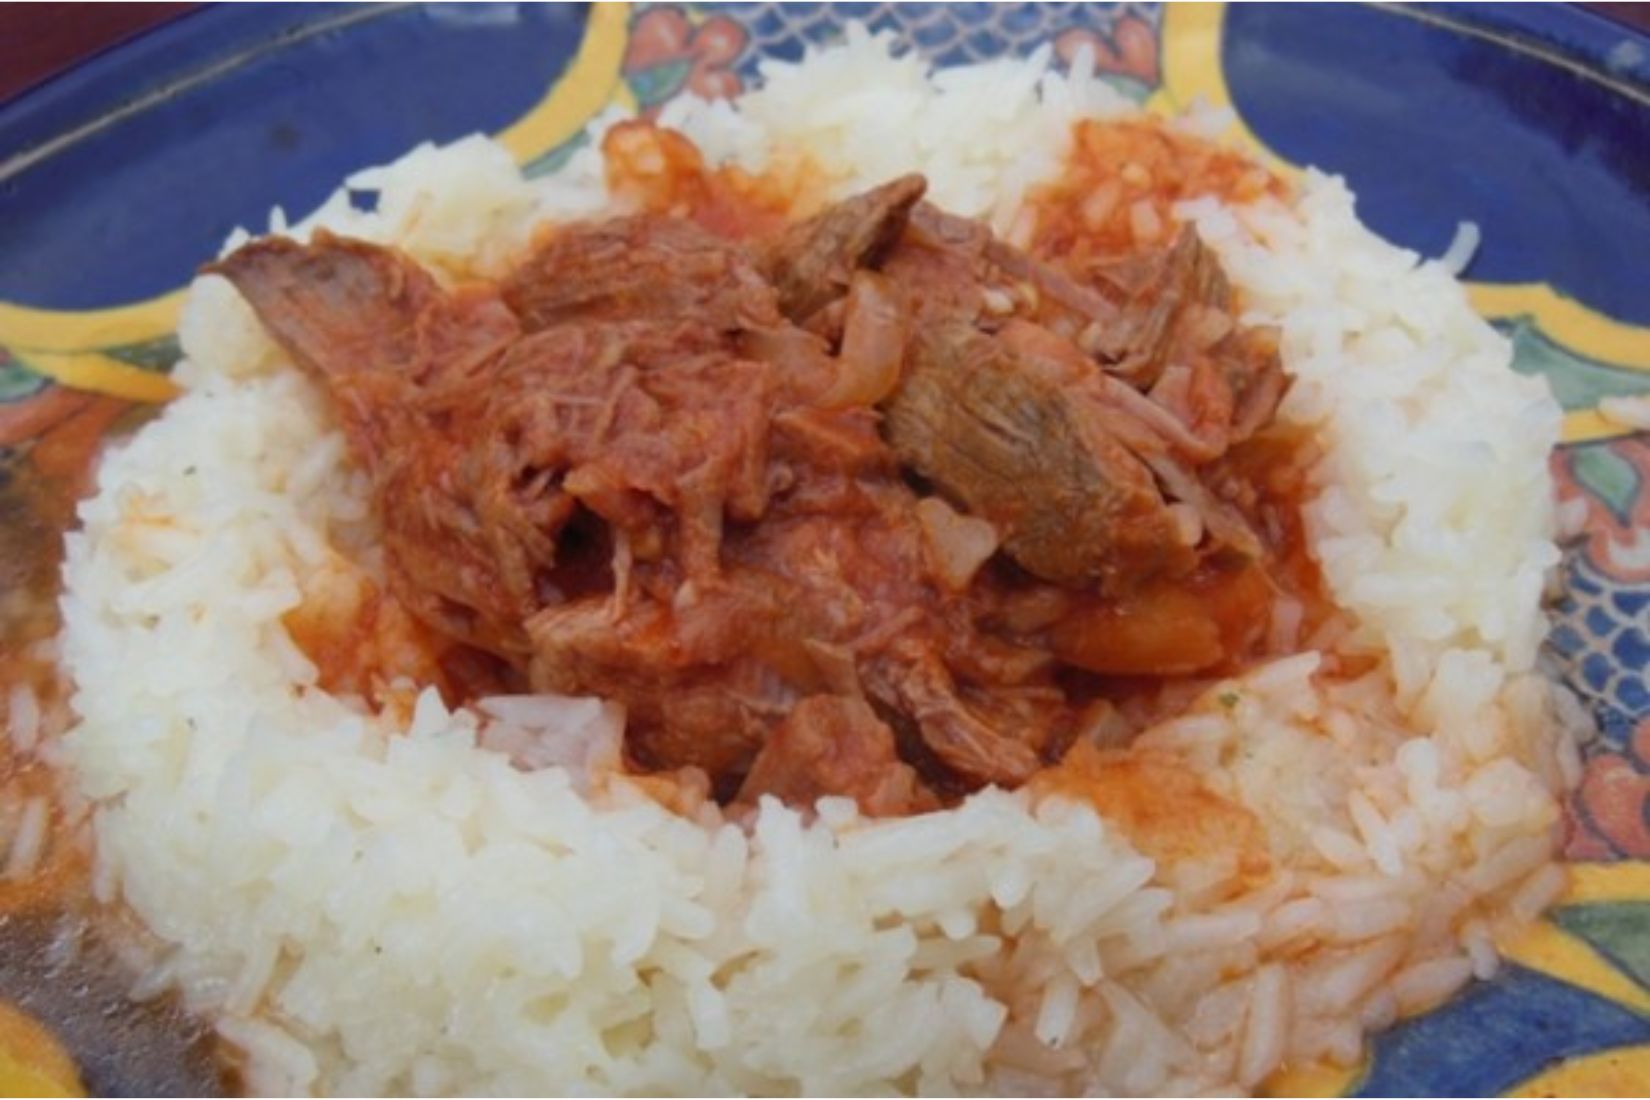 Morisqueta de compañía_ Se trata de un arroz blanco acompañado de carne de puerco guisada con jitomate, cebolla, ajo y chiles serranos